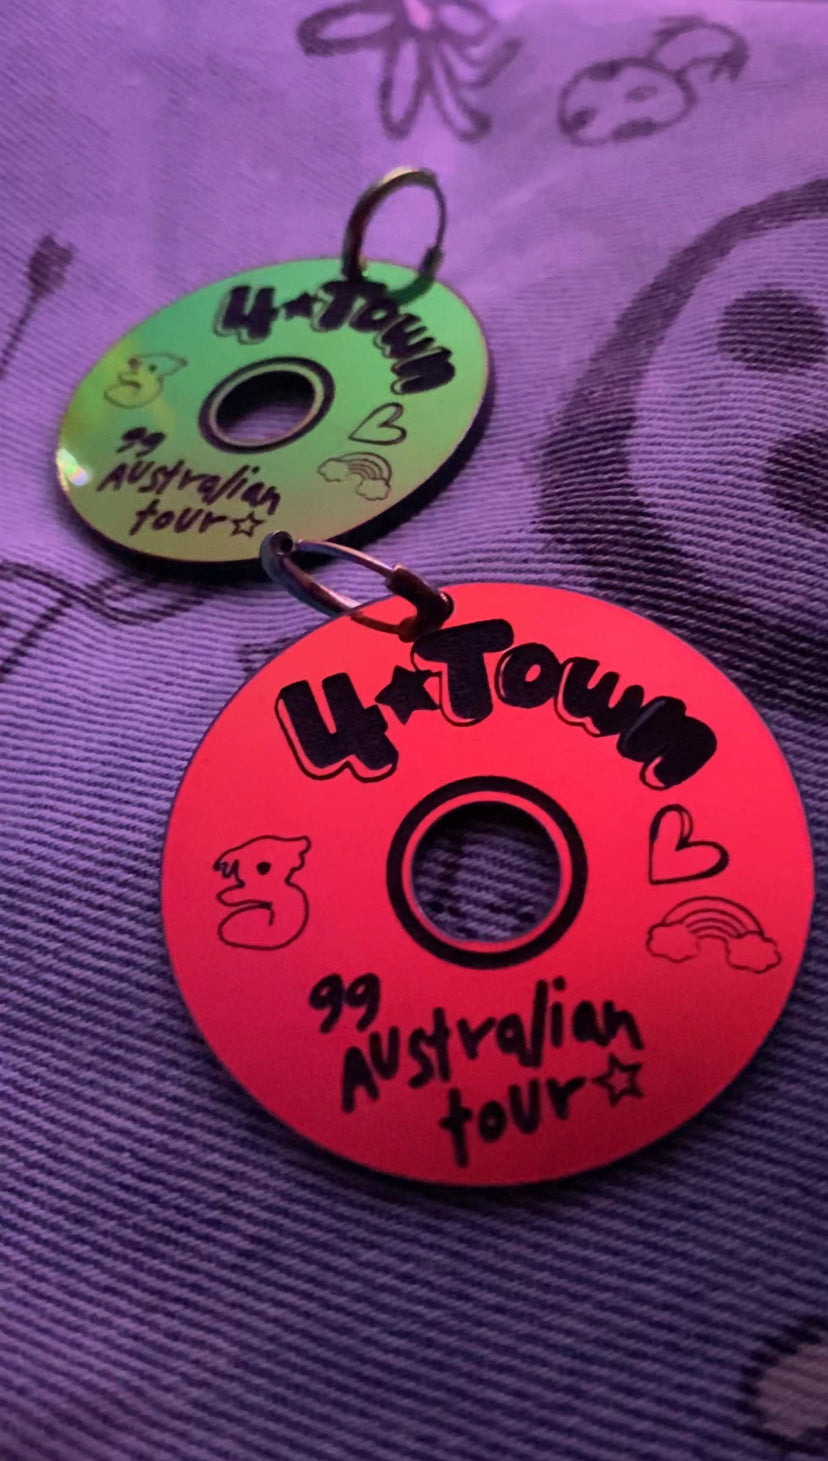 4*TOWN ‘99 Australian Tour CD